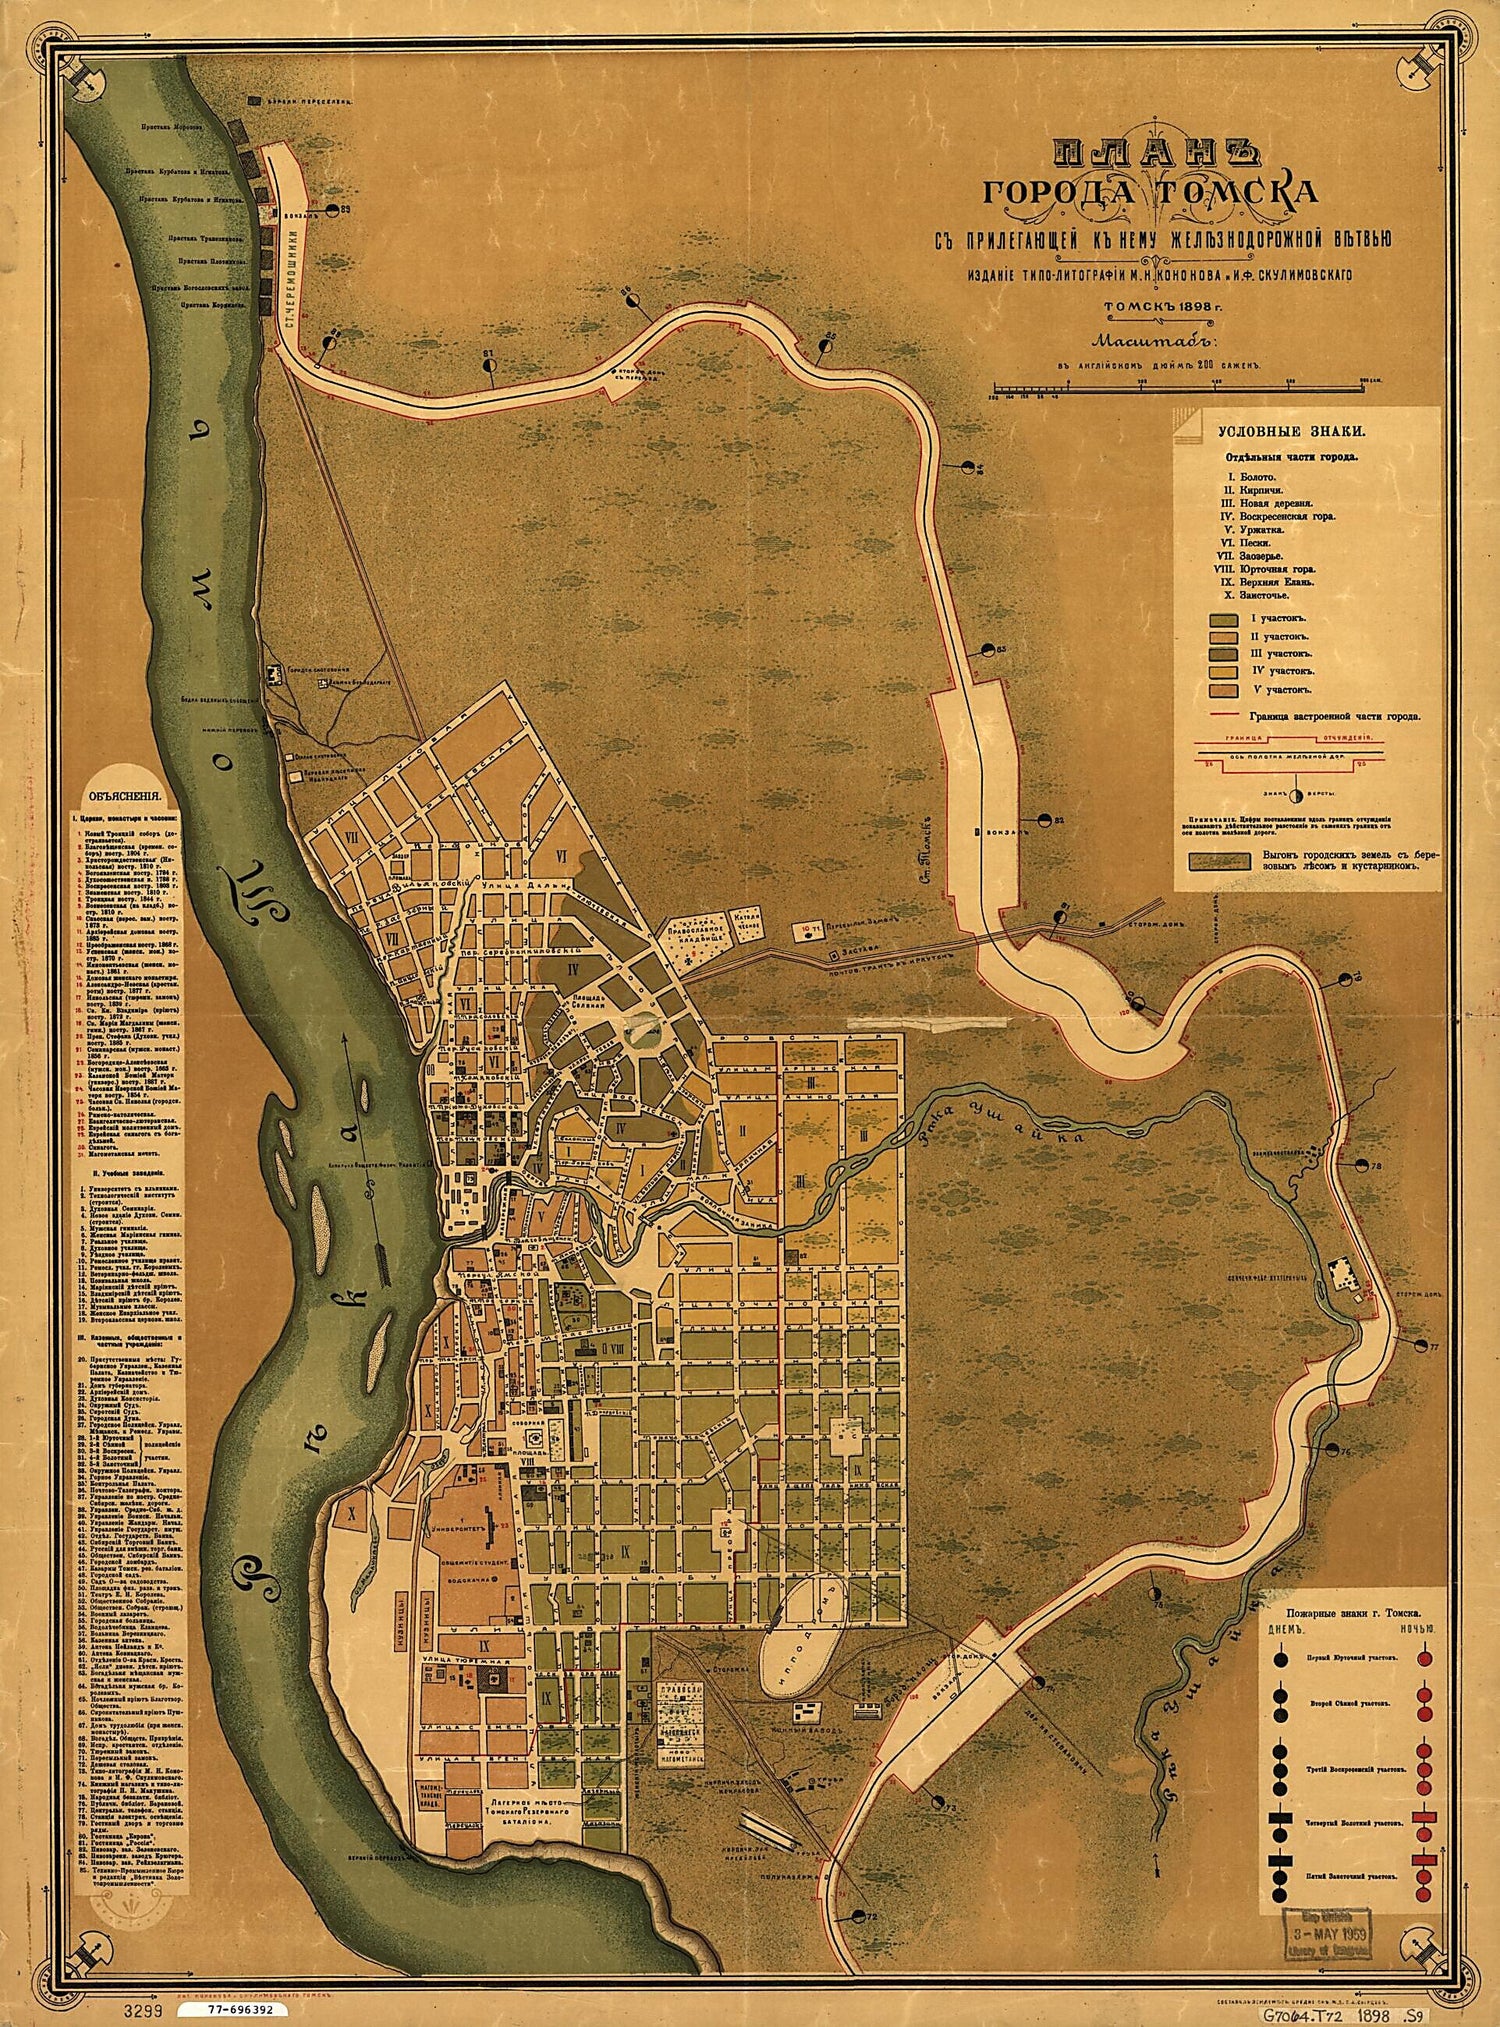 This old map of Plan Goroda Tomska S Prilegai︠u︡shcheĭ K Nemu Zheli︠e︡znodorozhnoĭ Vi︠e︡tvʹi︠u︡ from 1898 was created by S. A. Syrt︠s︡ov,  Litografīi︠a︡ M. N. Kononova I I. F. Skulimovskago in 1898